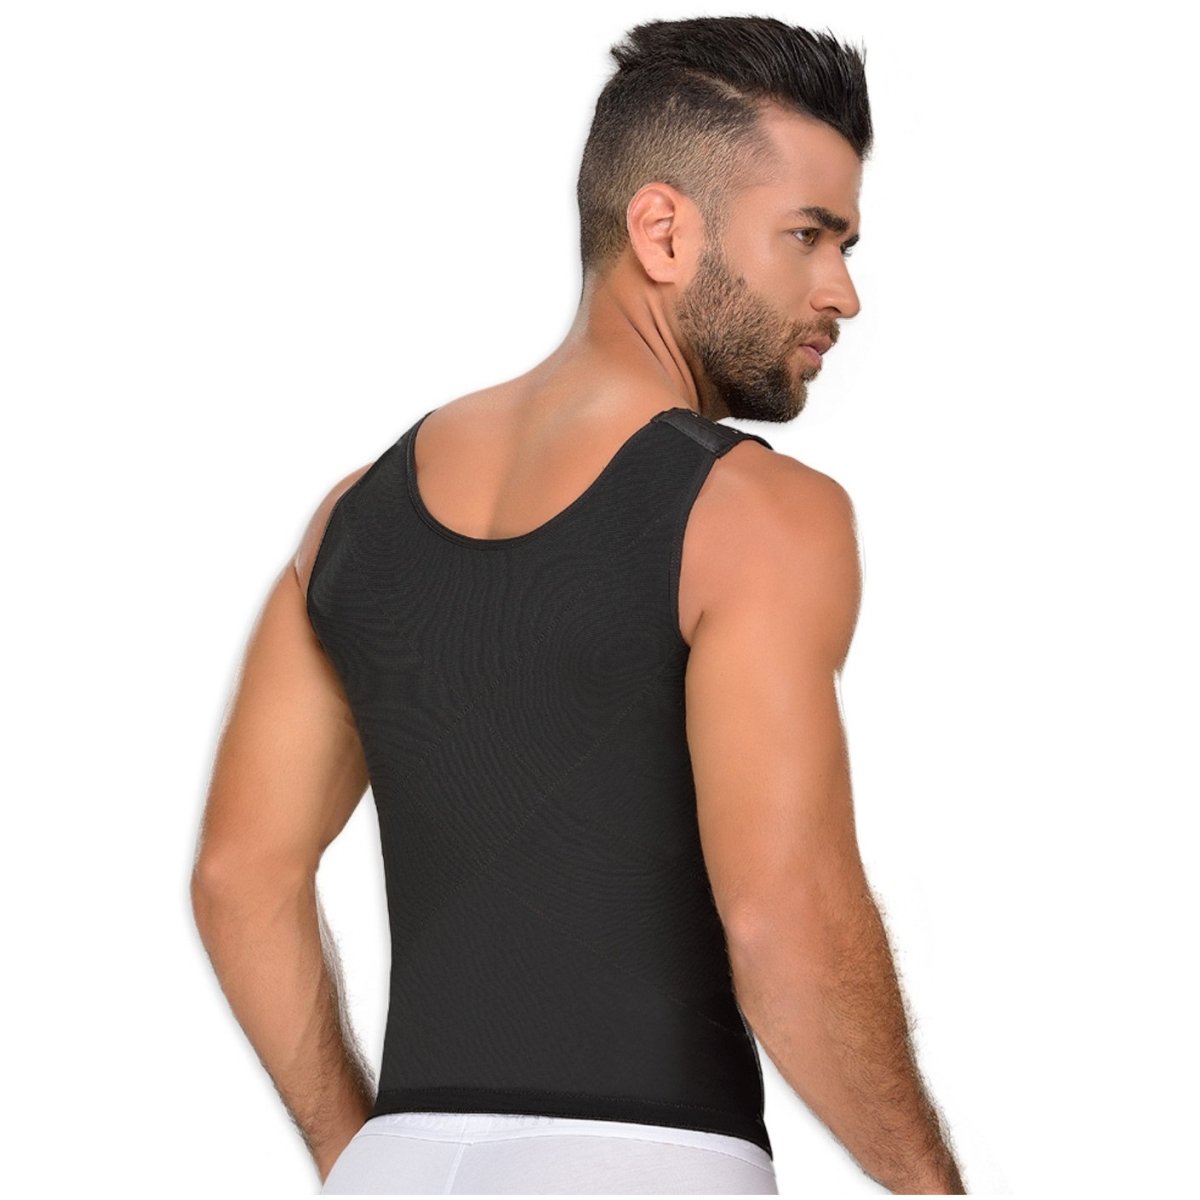 M&D 0060 Compression Vest Shirt Body Shaper for Men - Colombian Body Shaper